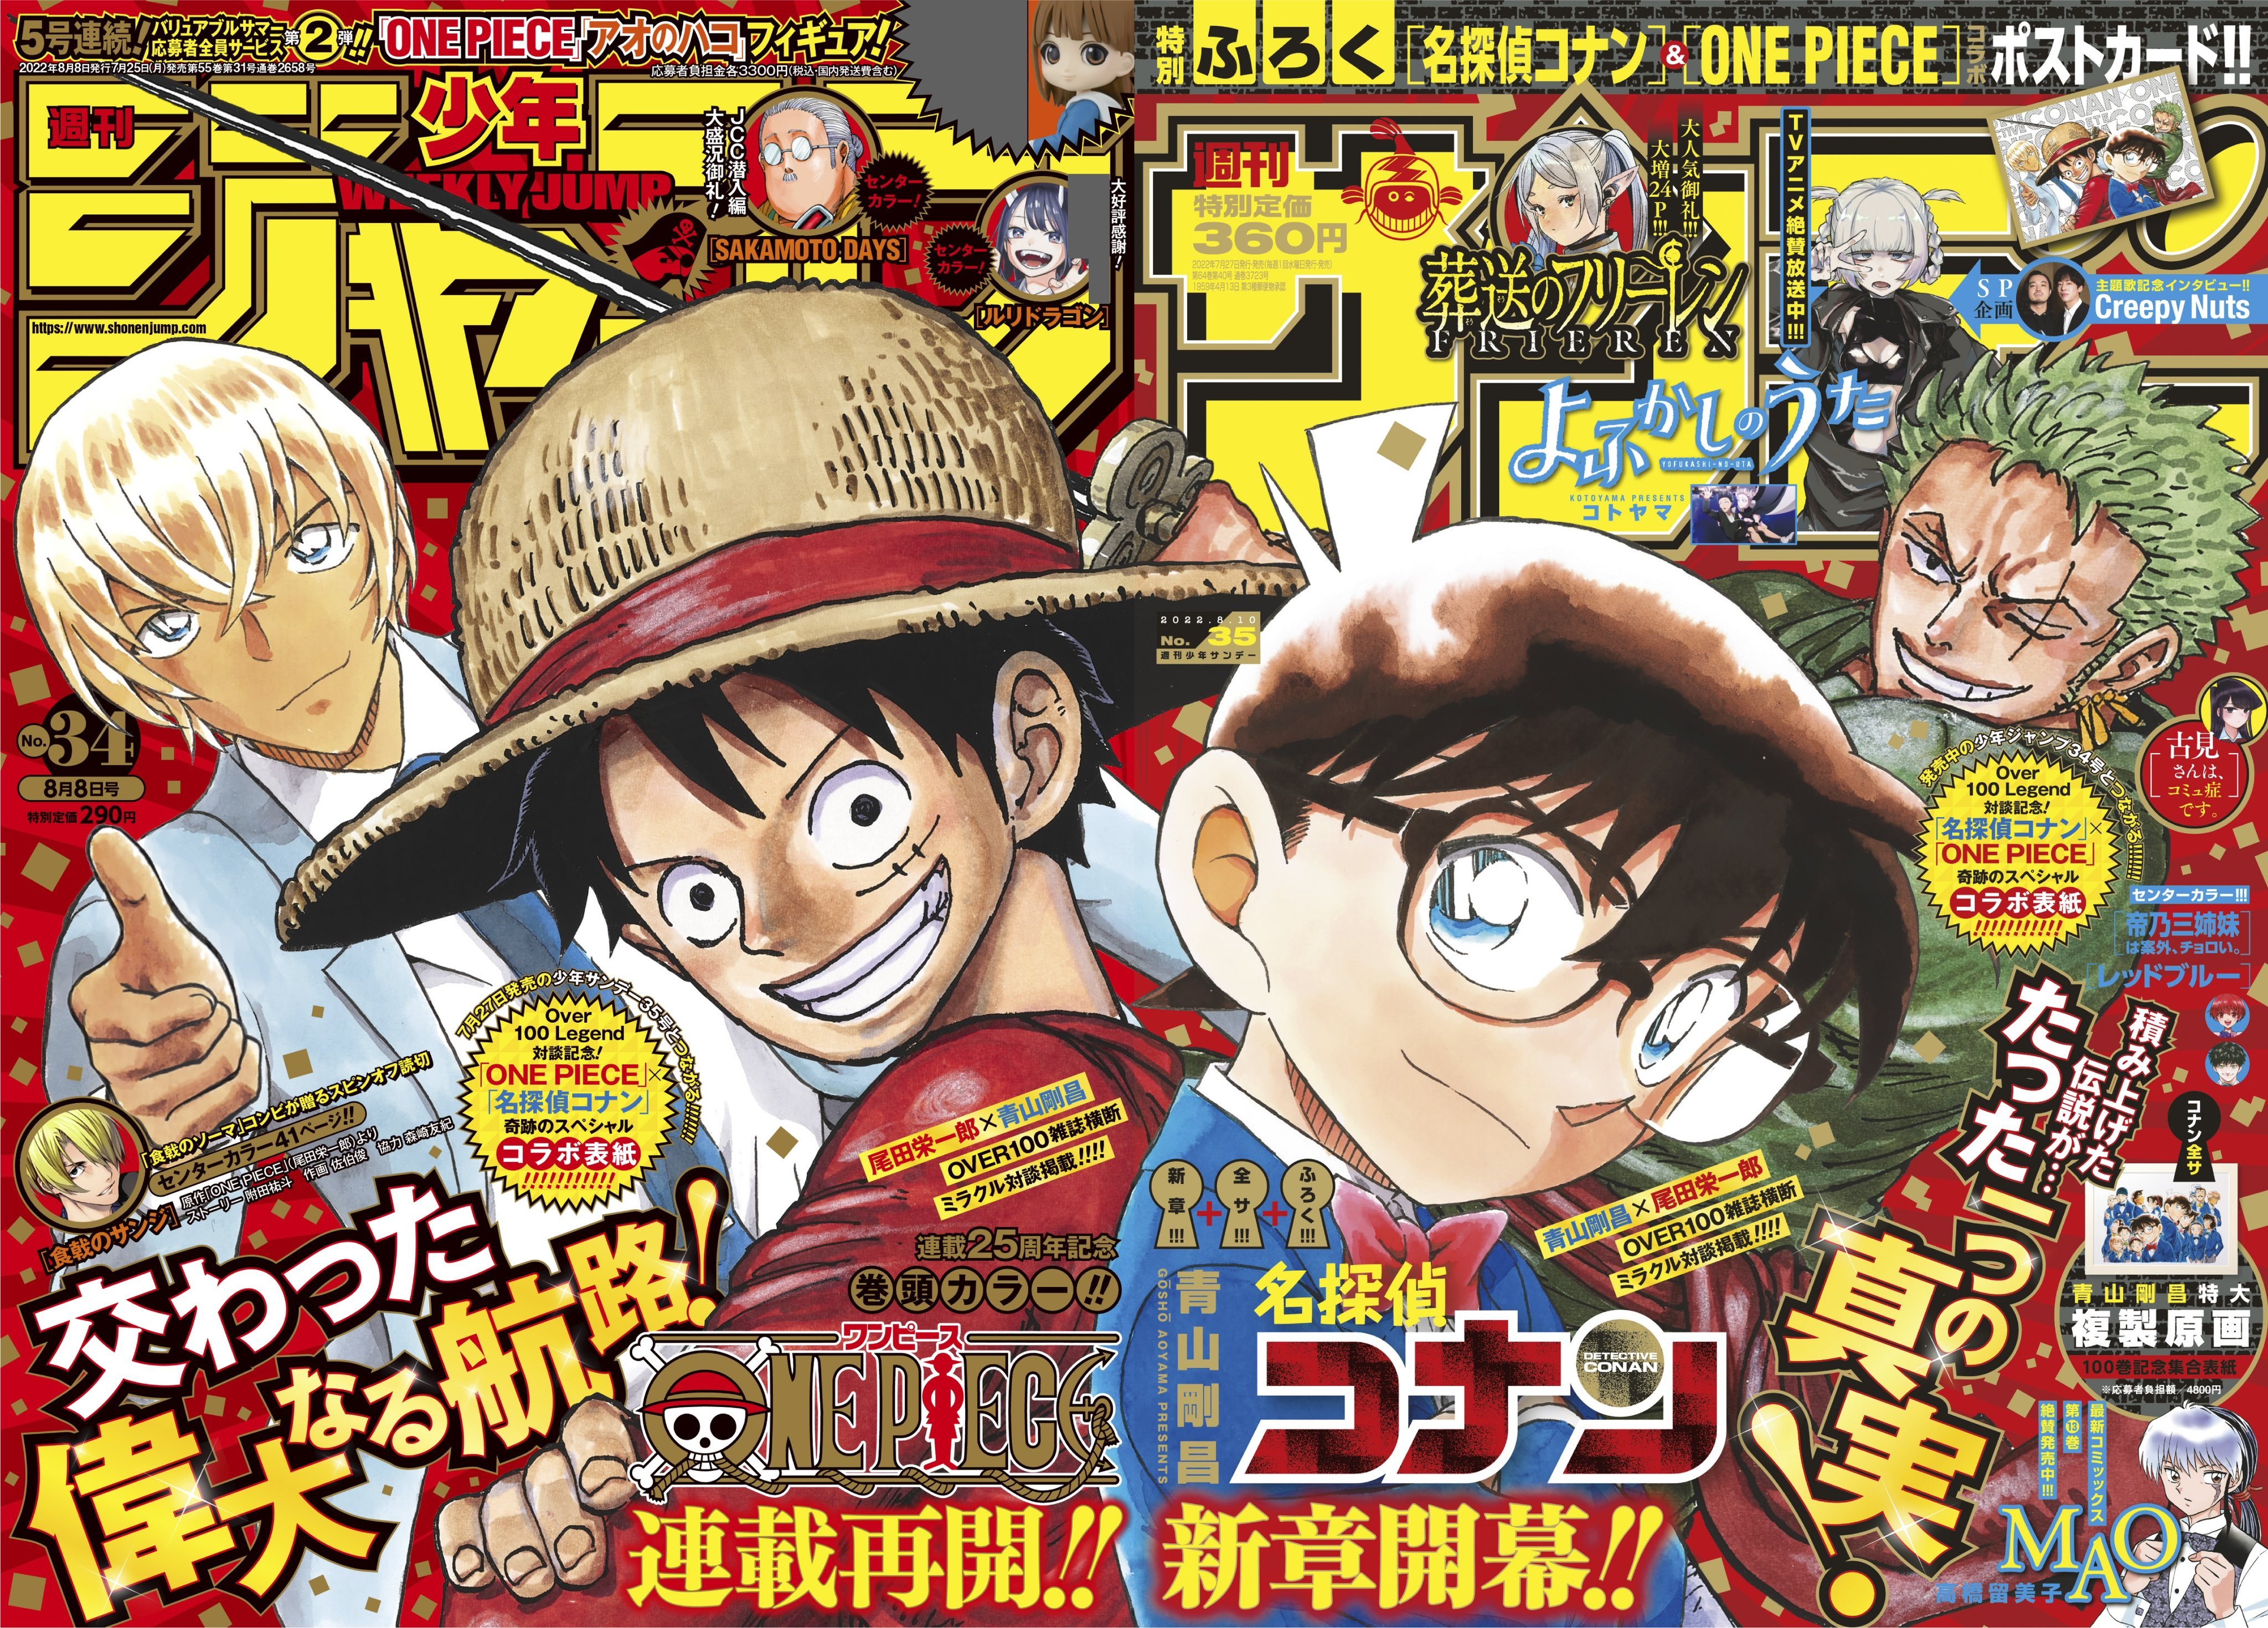 One Piece fin 3 ans Eiichiro Oda Gosho Aoyama Interview croisée Weekly Shonen Jump Weekly Shonen Sunday 